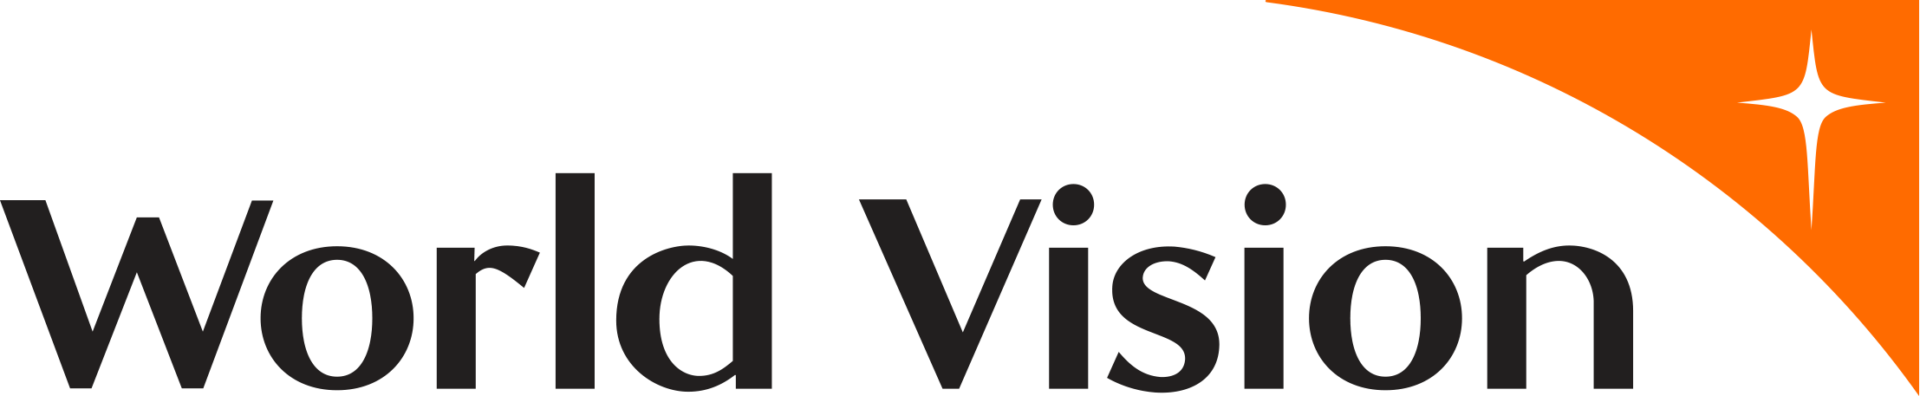 World Vision International logo